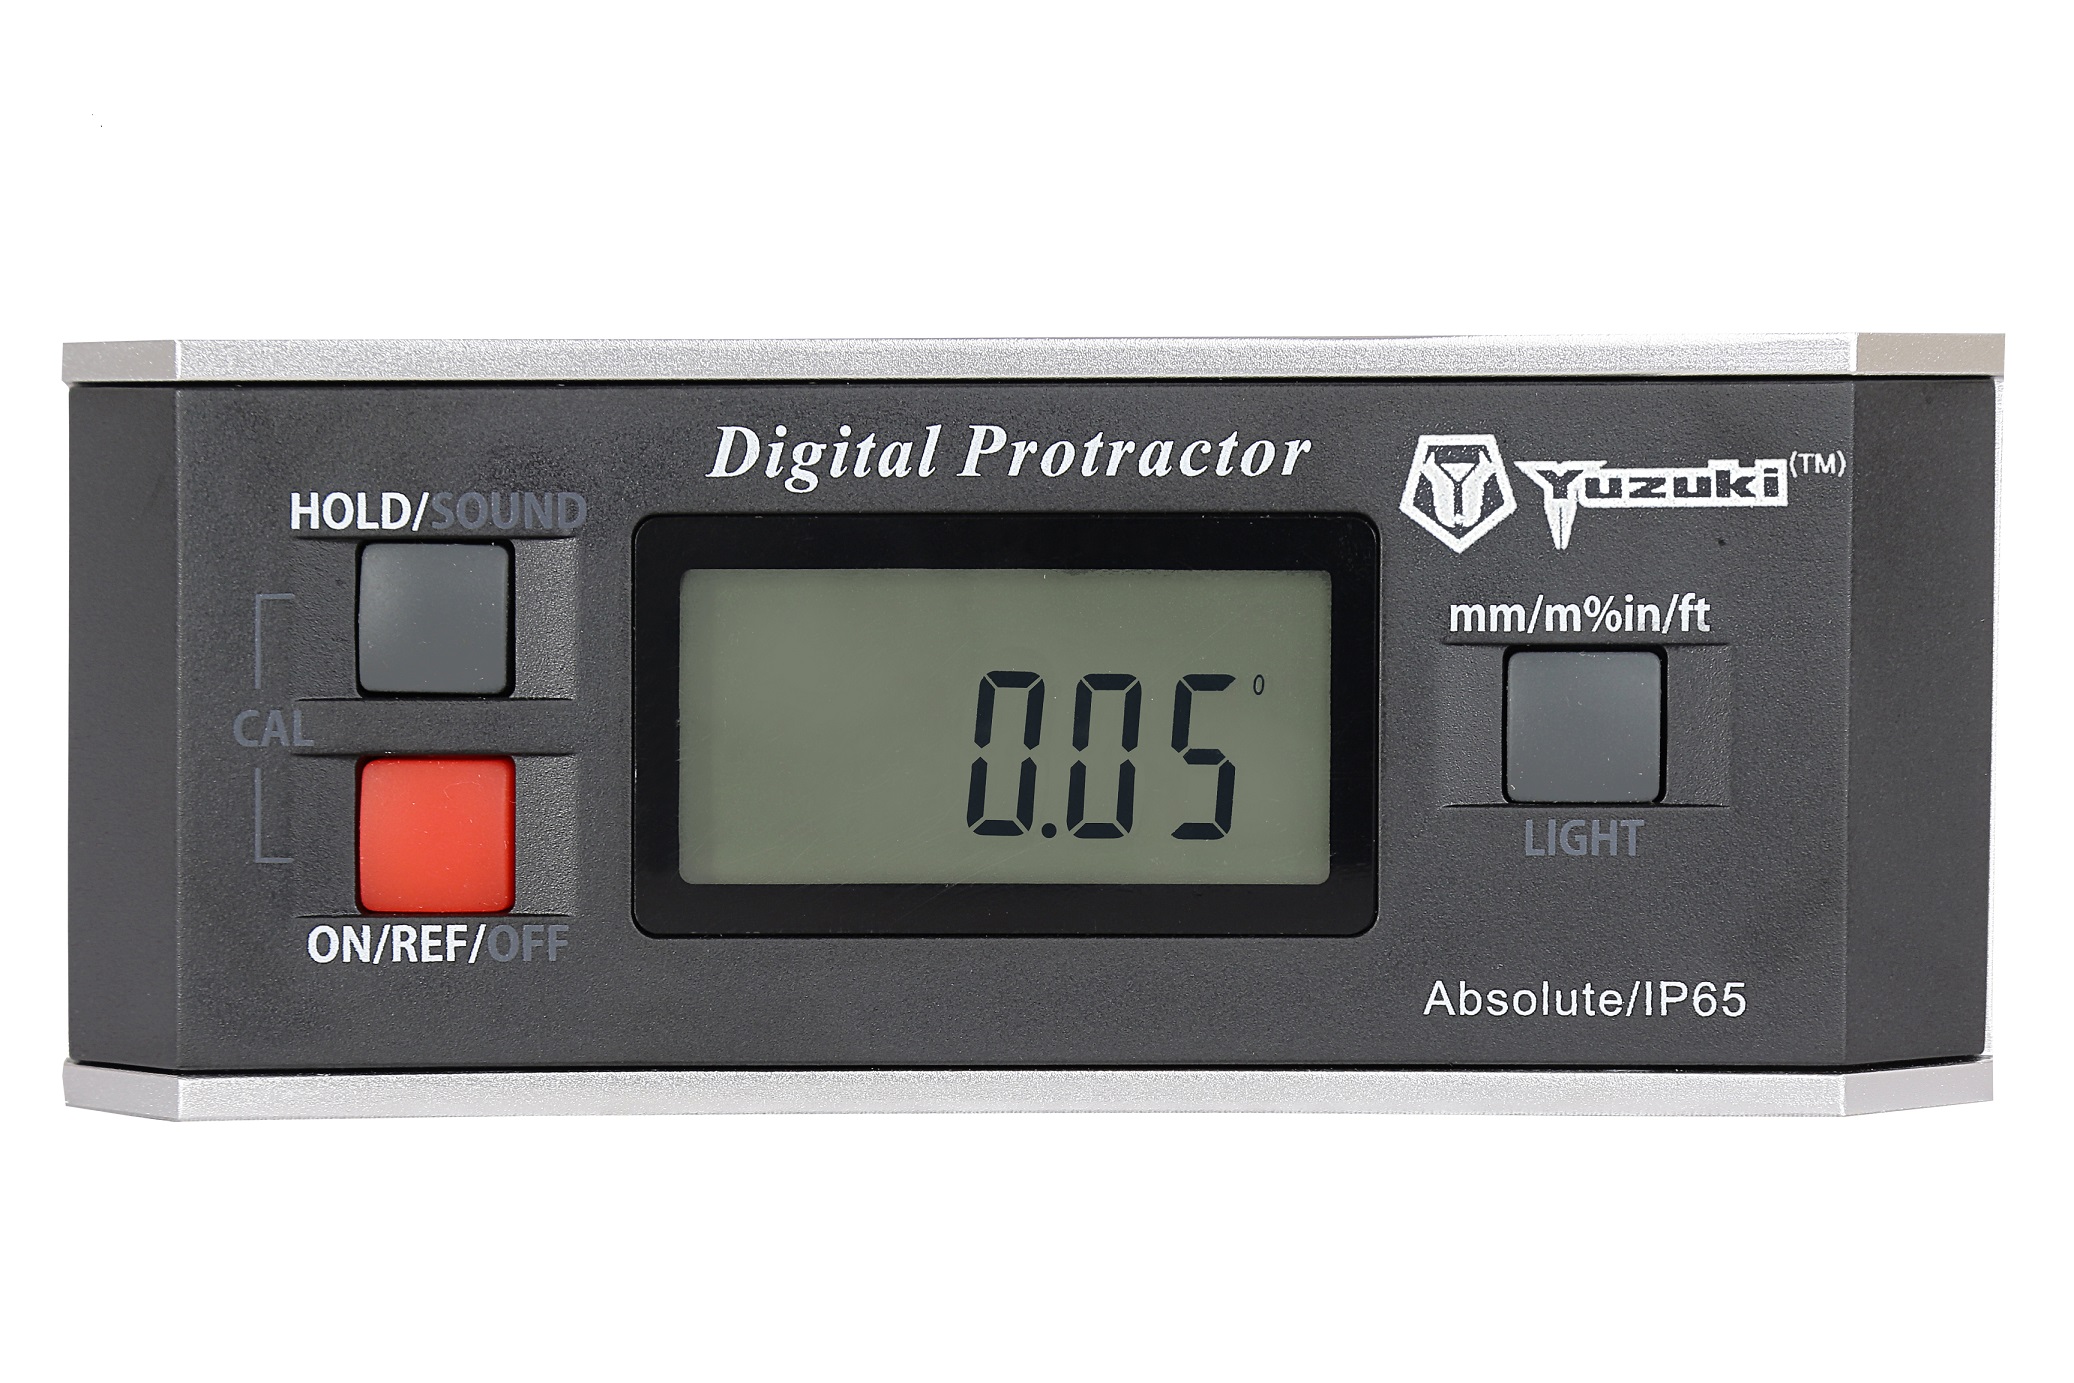 Digital Protractor (Digital Level) » Yuzuki Measuring Instruments